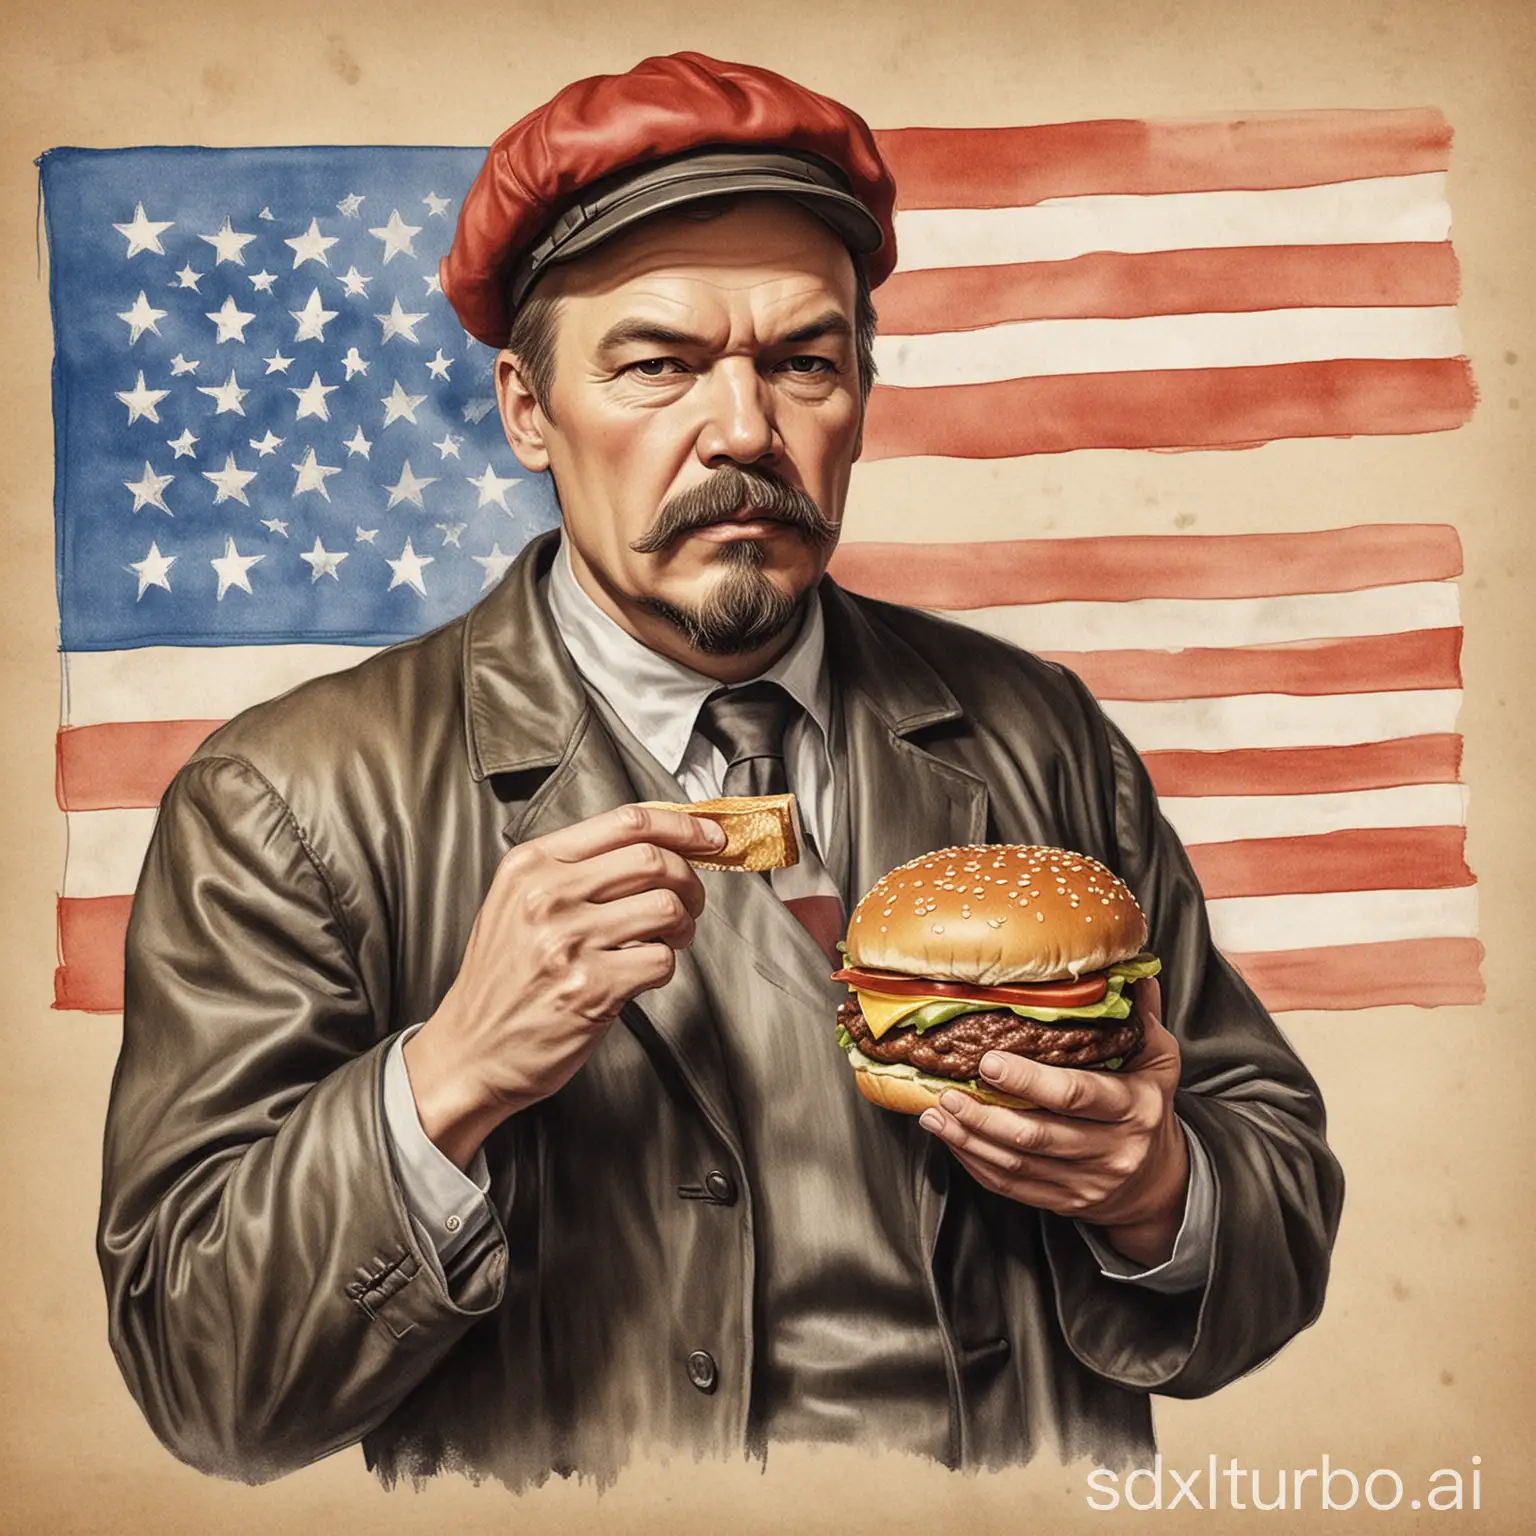 Lenin-Wearing-American-Flag-TShirt-and-Capitalist-Hat-Eating-Hamburger